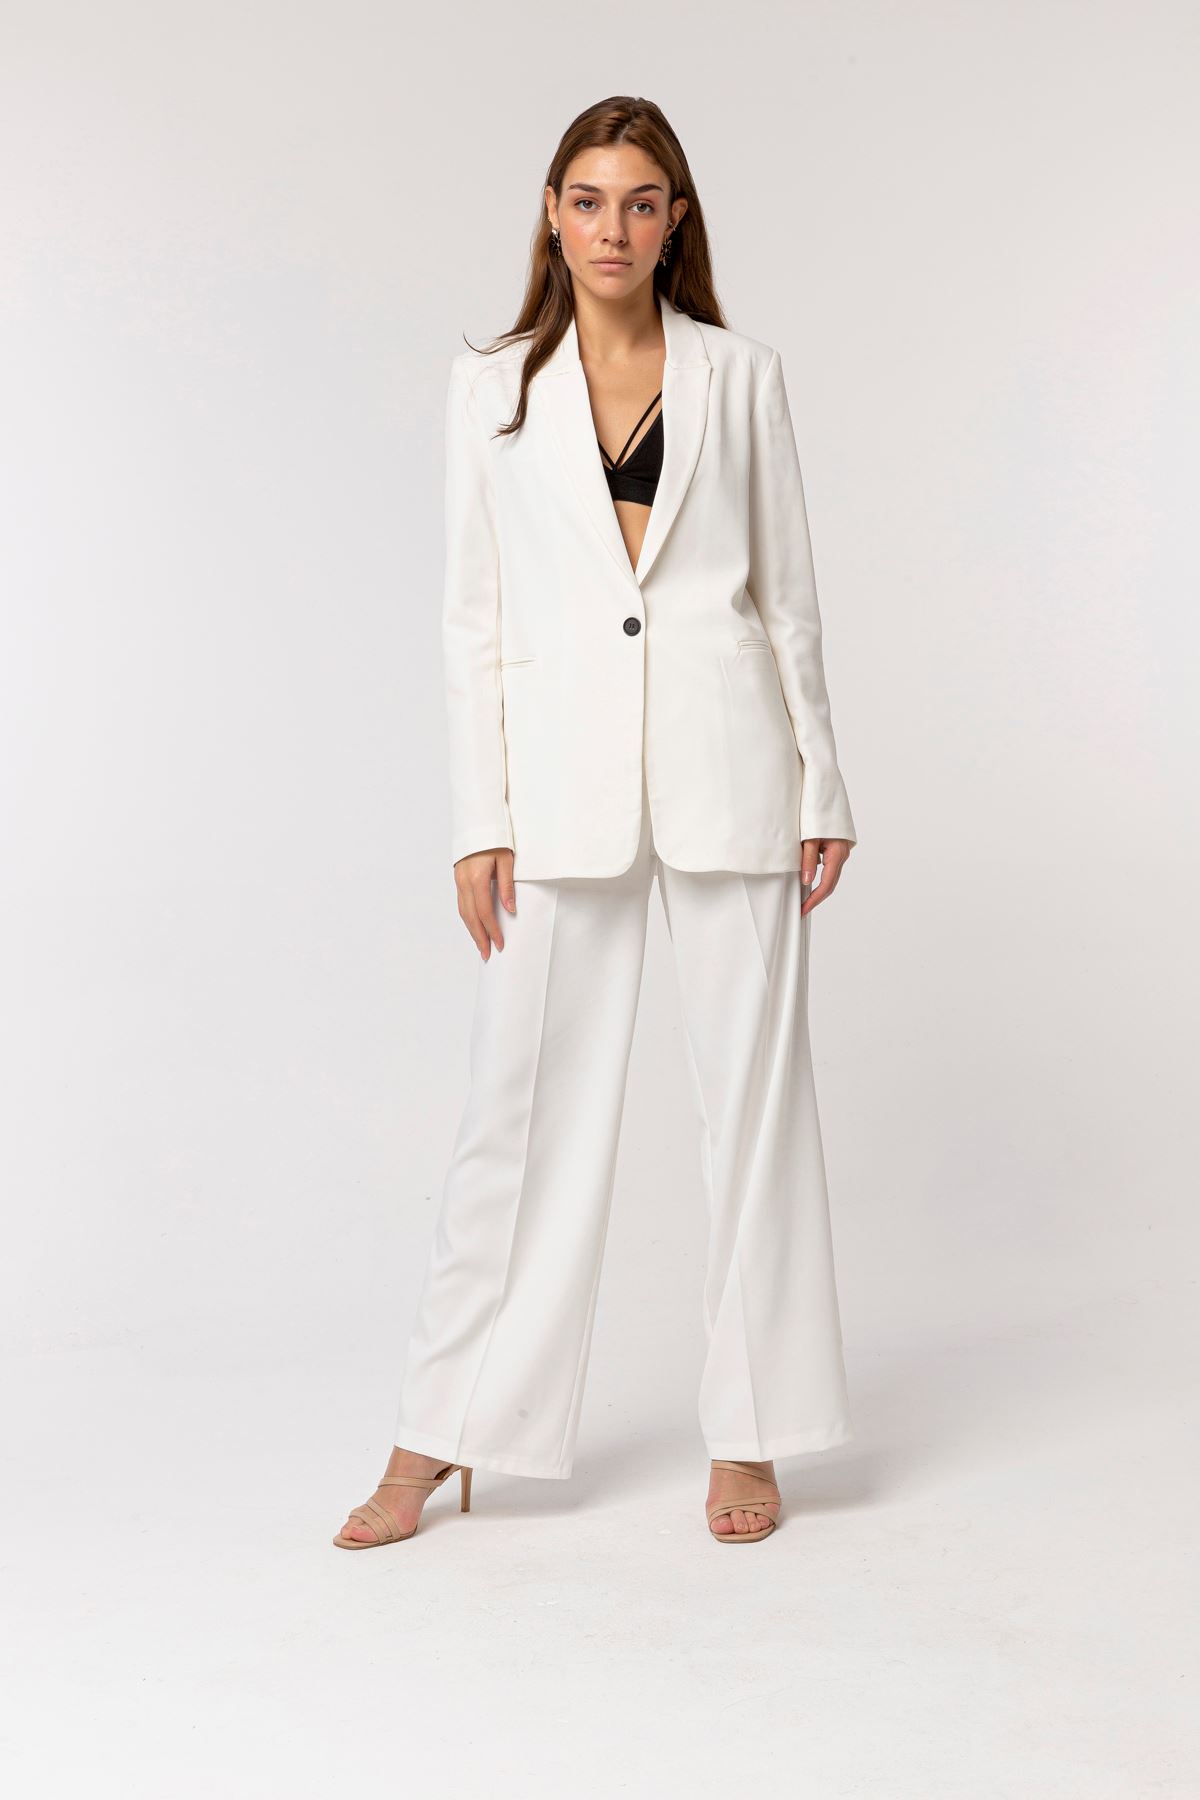 Atlas Fabric Revere Collar Below Hip Classical Single Button Women Jacket - Ecru